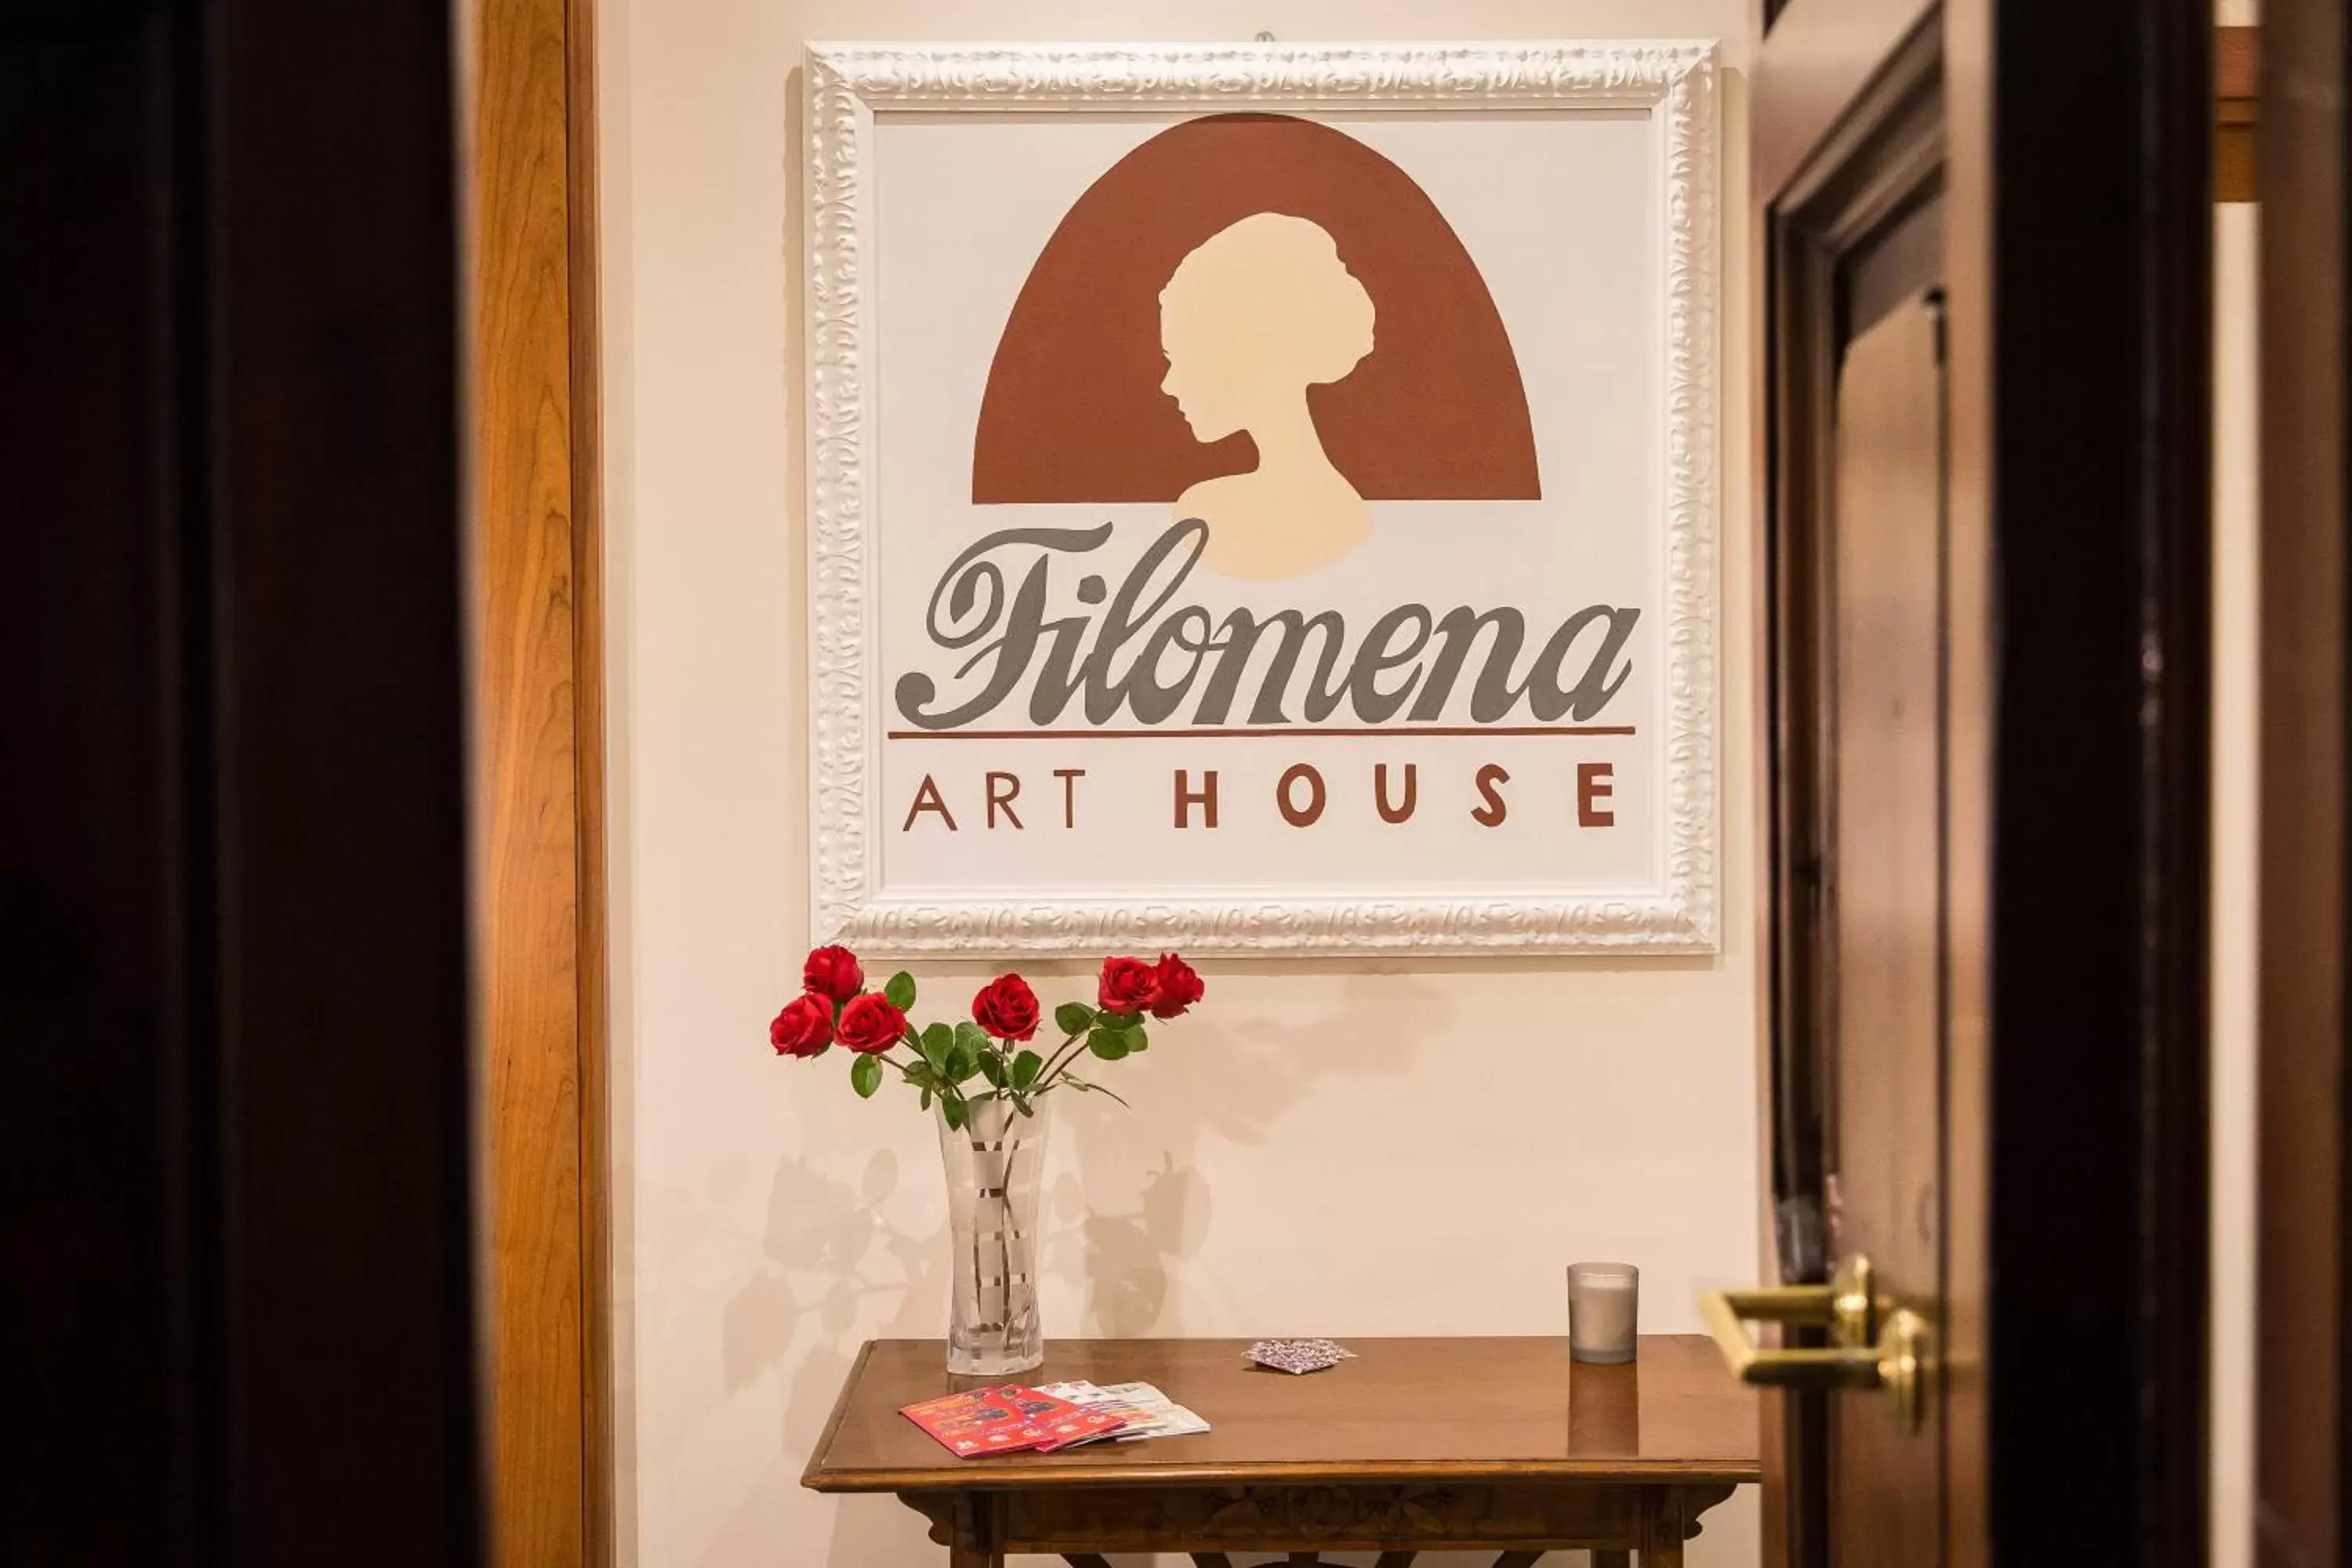 Property logo or sign in Filomena Arthouse